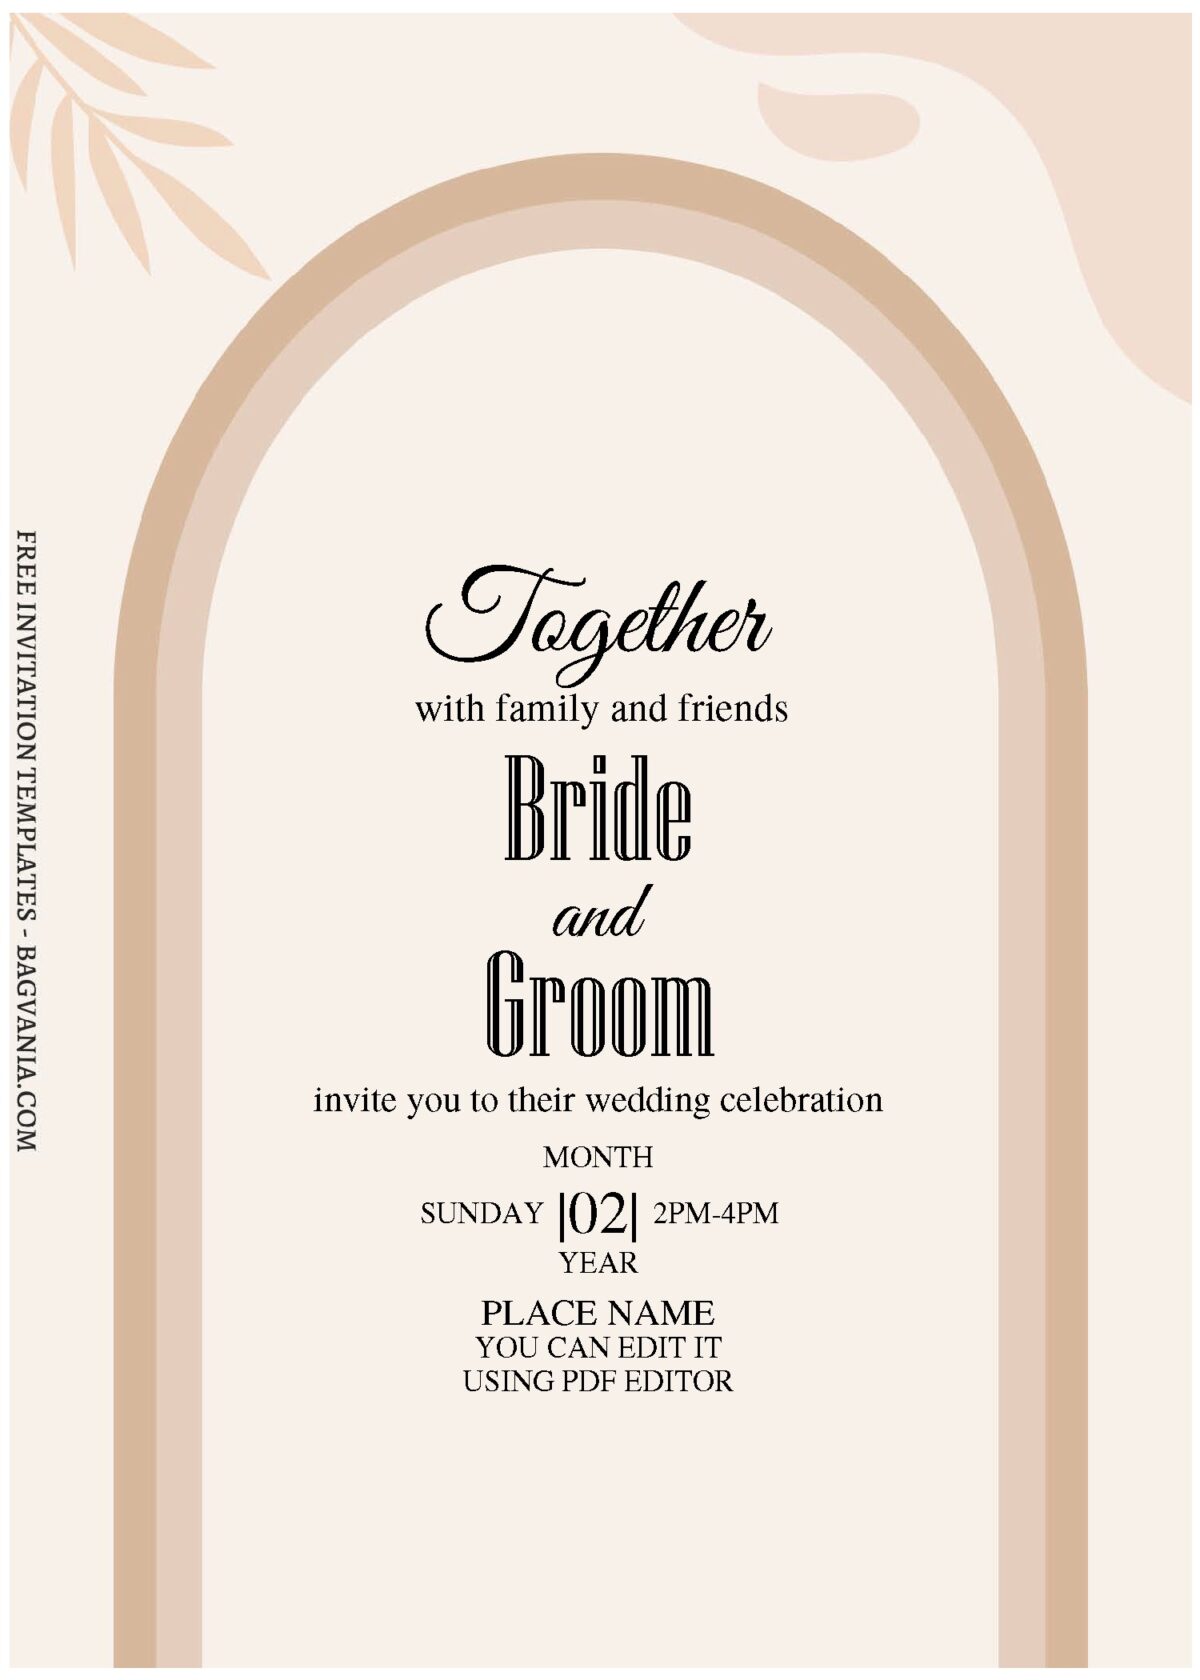 (Free Editable PDF) Greenery Arch Wedding Invitation Templates with elegant typefaces